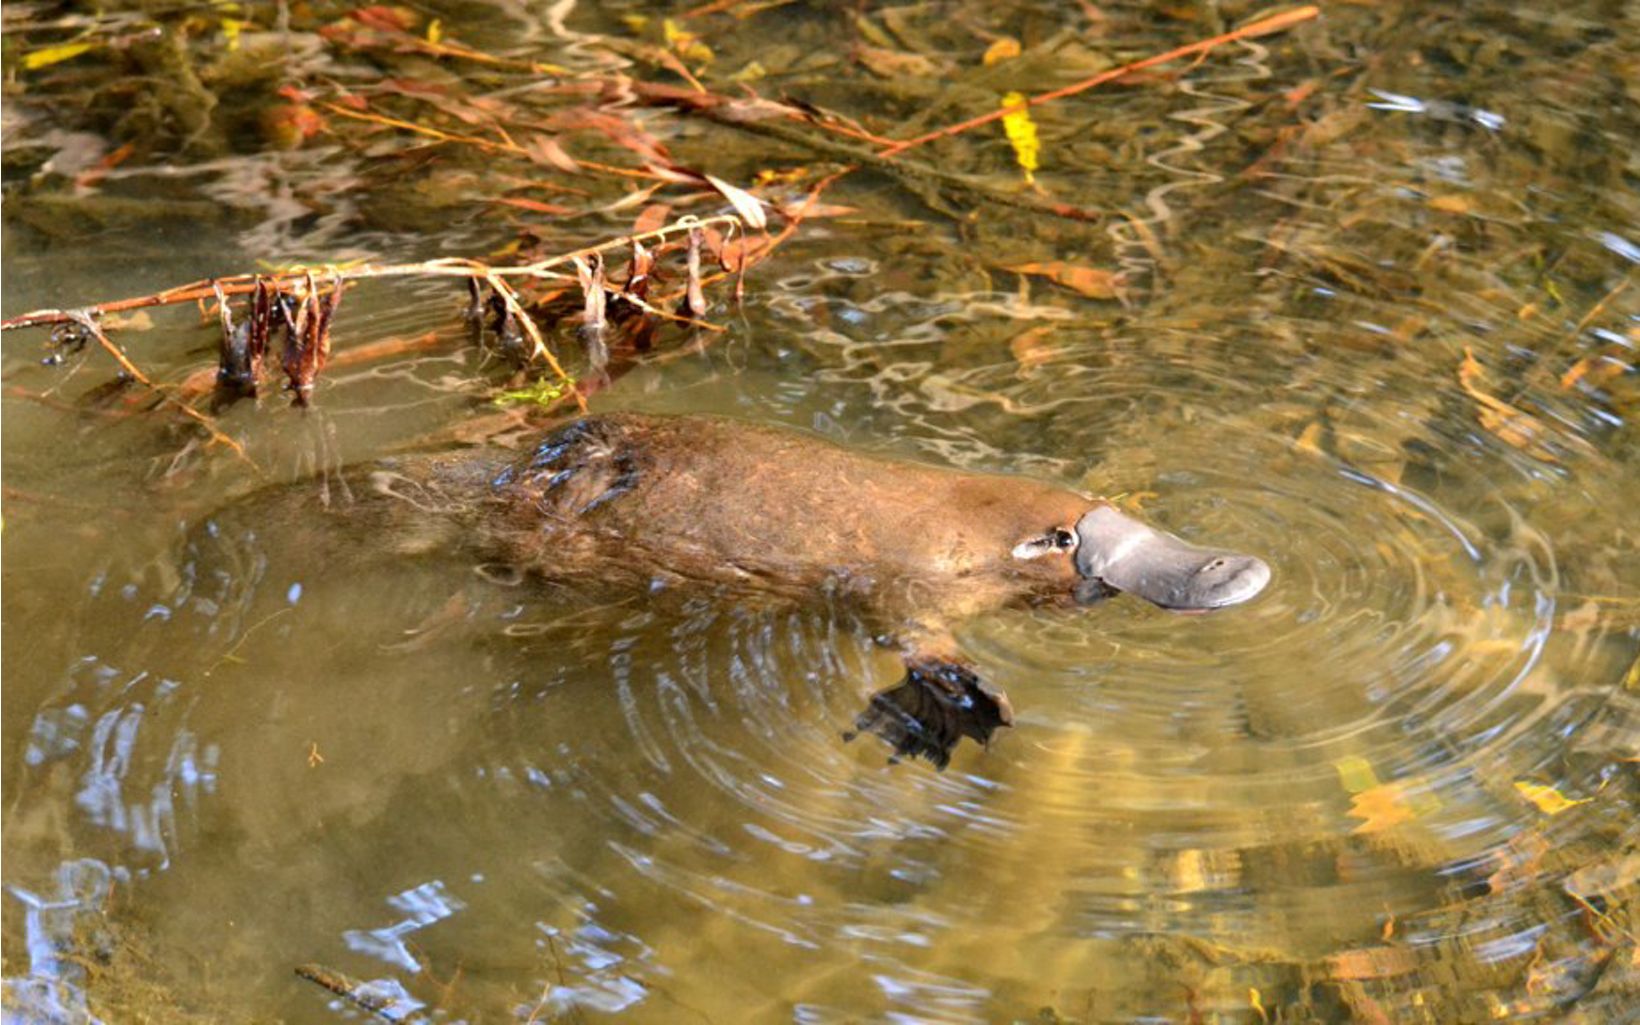 Platypus an egg laying aquatic mammal of eastern Australia  © Klaus Ber, Wikimedia Commons